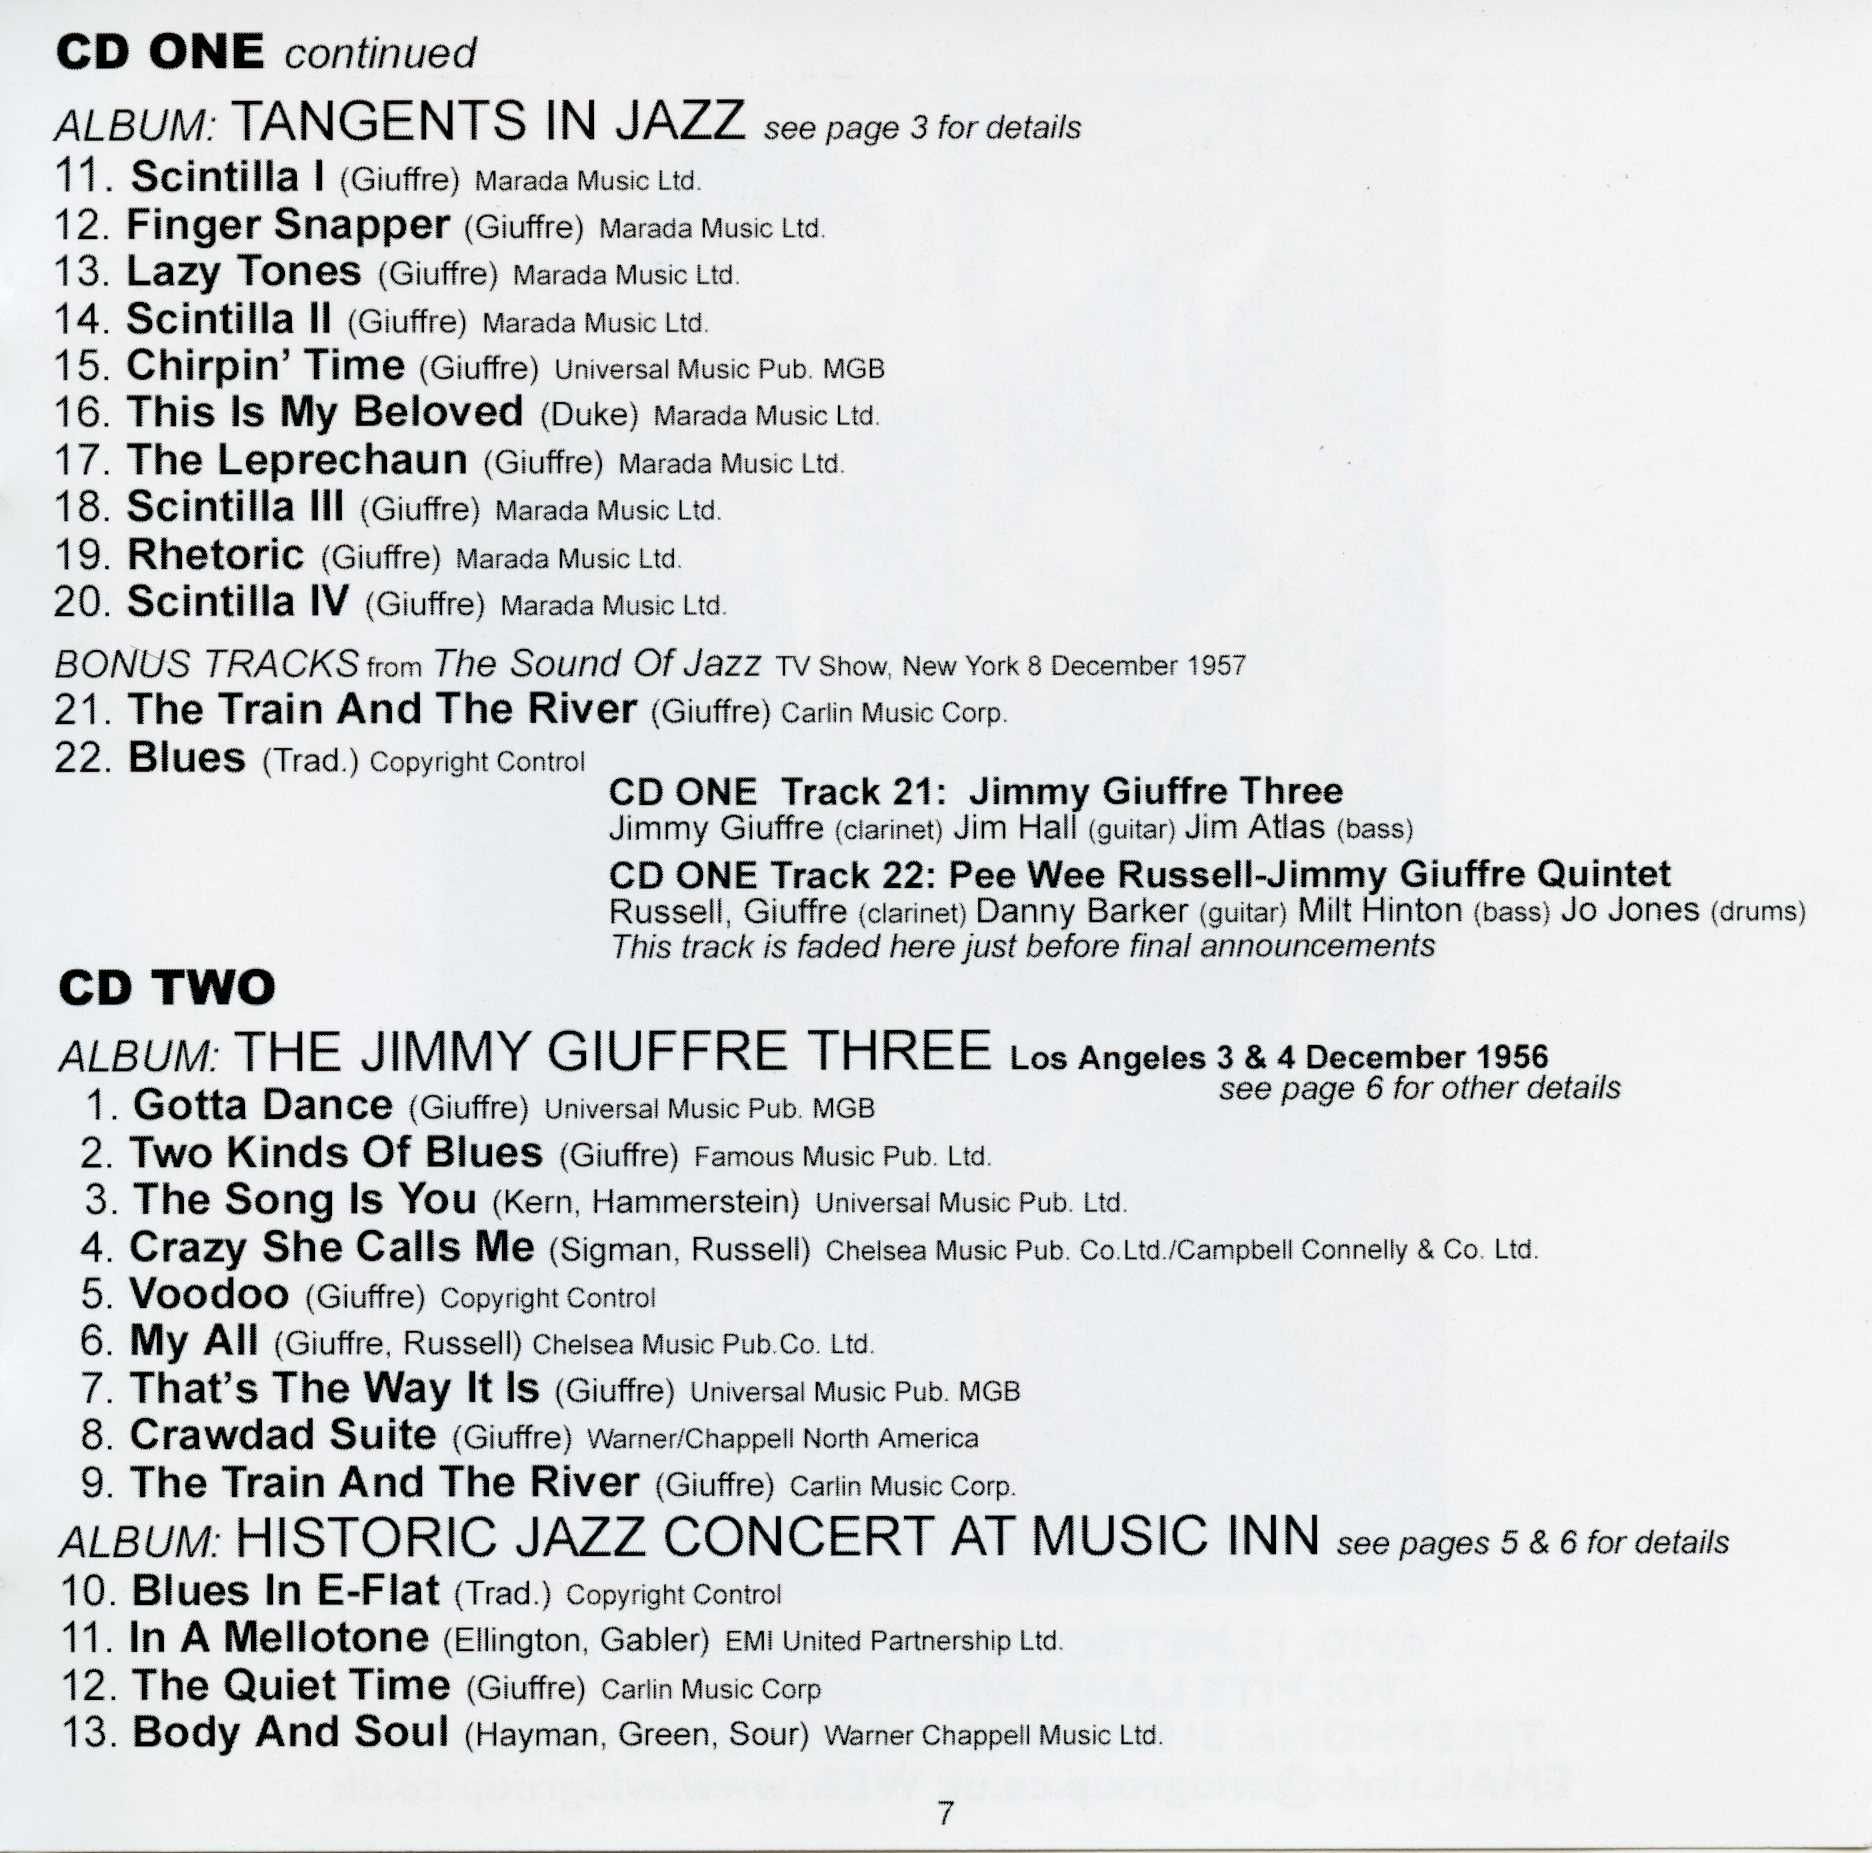 JIMMY GIUFFRE - Four Classic Albums plus 2CD, AVID Jazz – AMSC 948